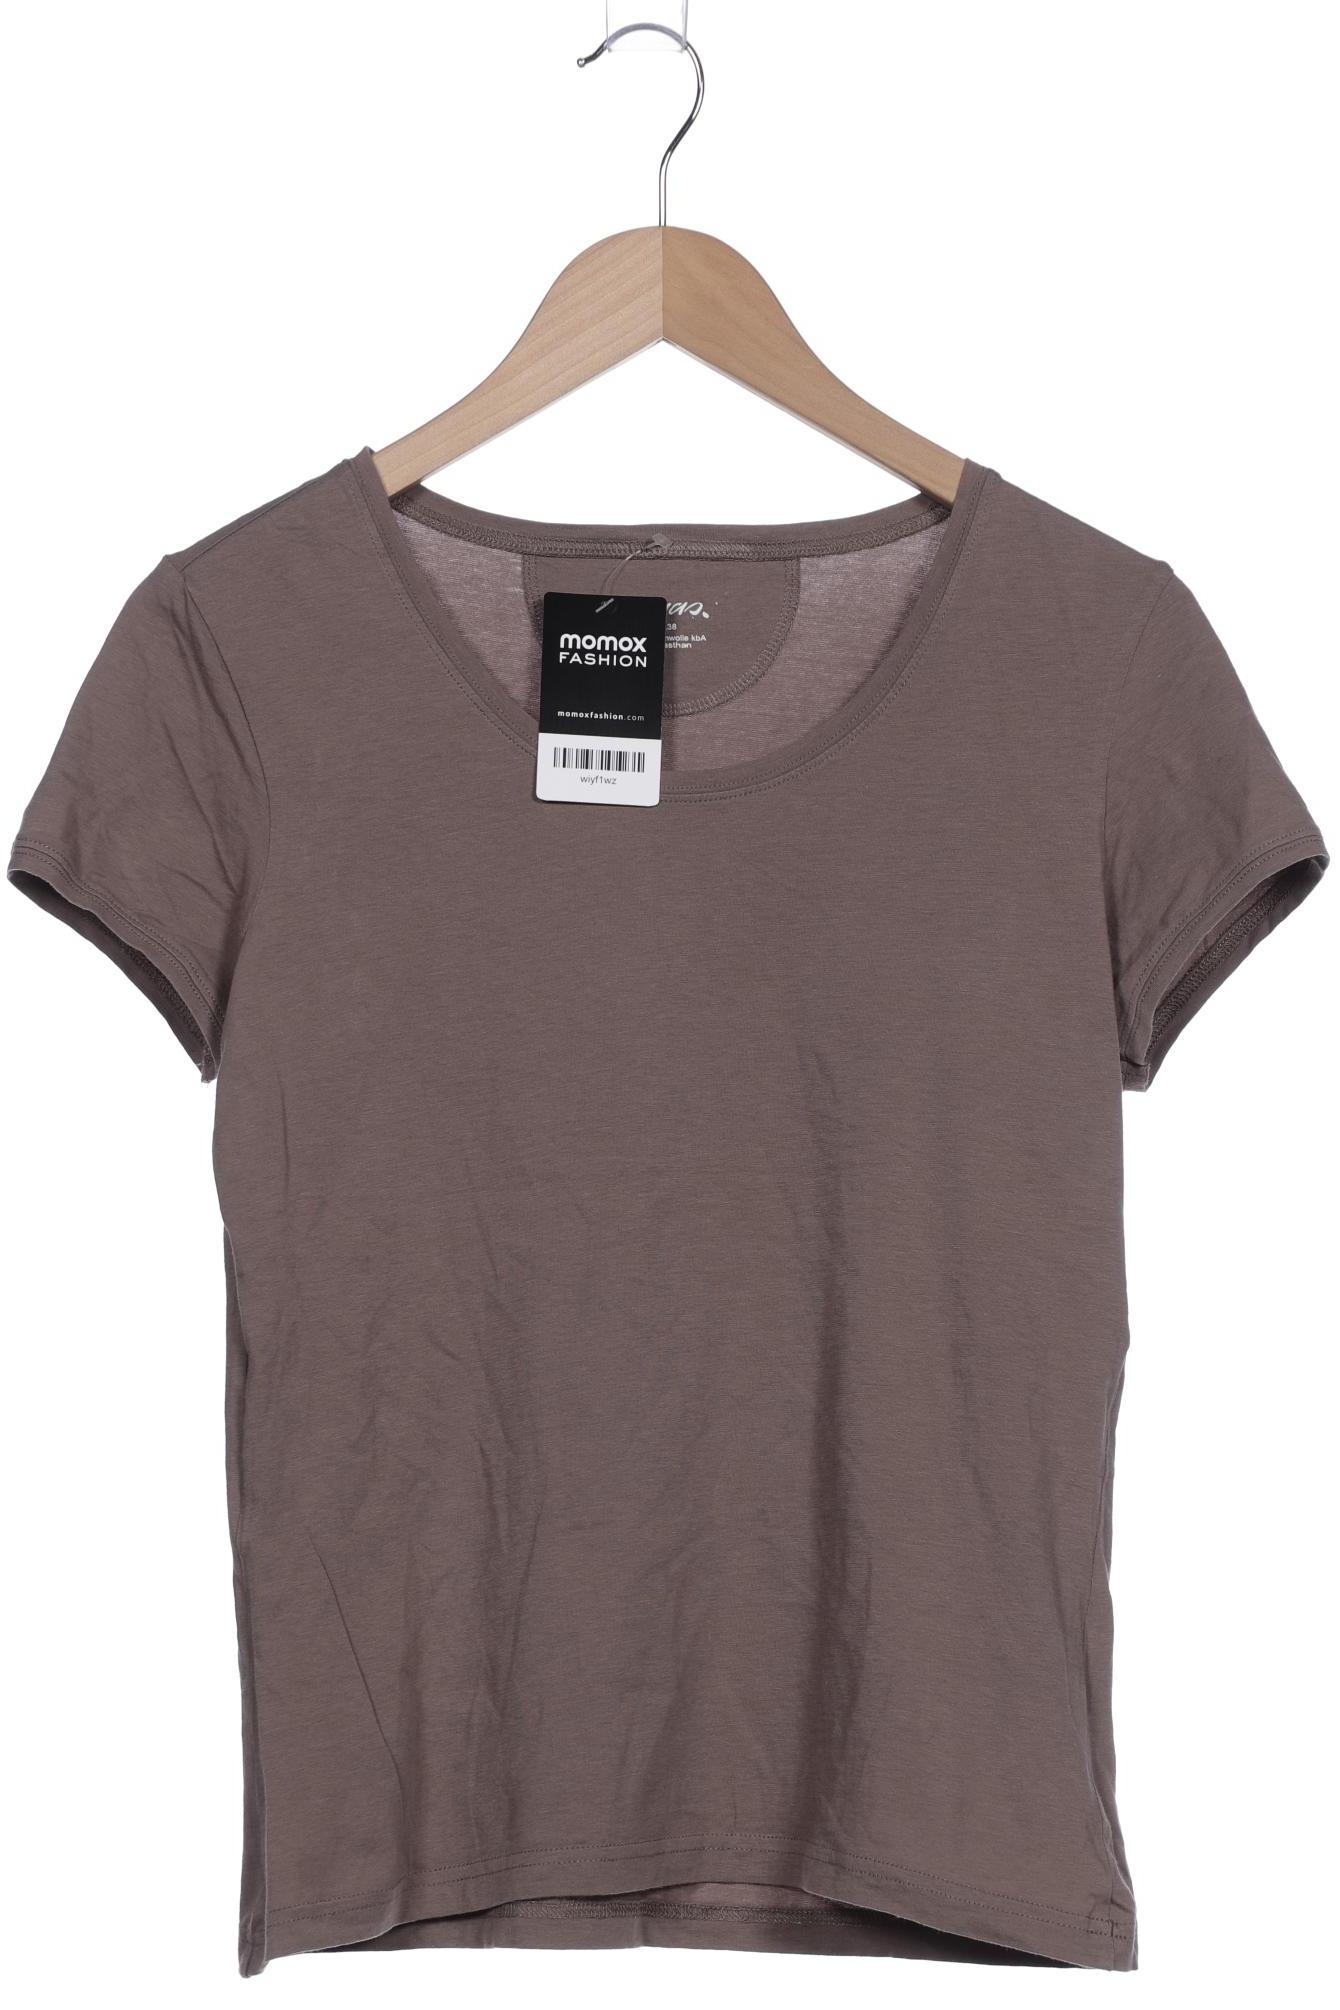 Maas Damen T-Shirt, braun, Gr. 38 von Maas